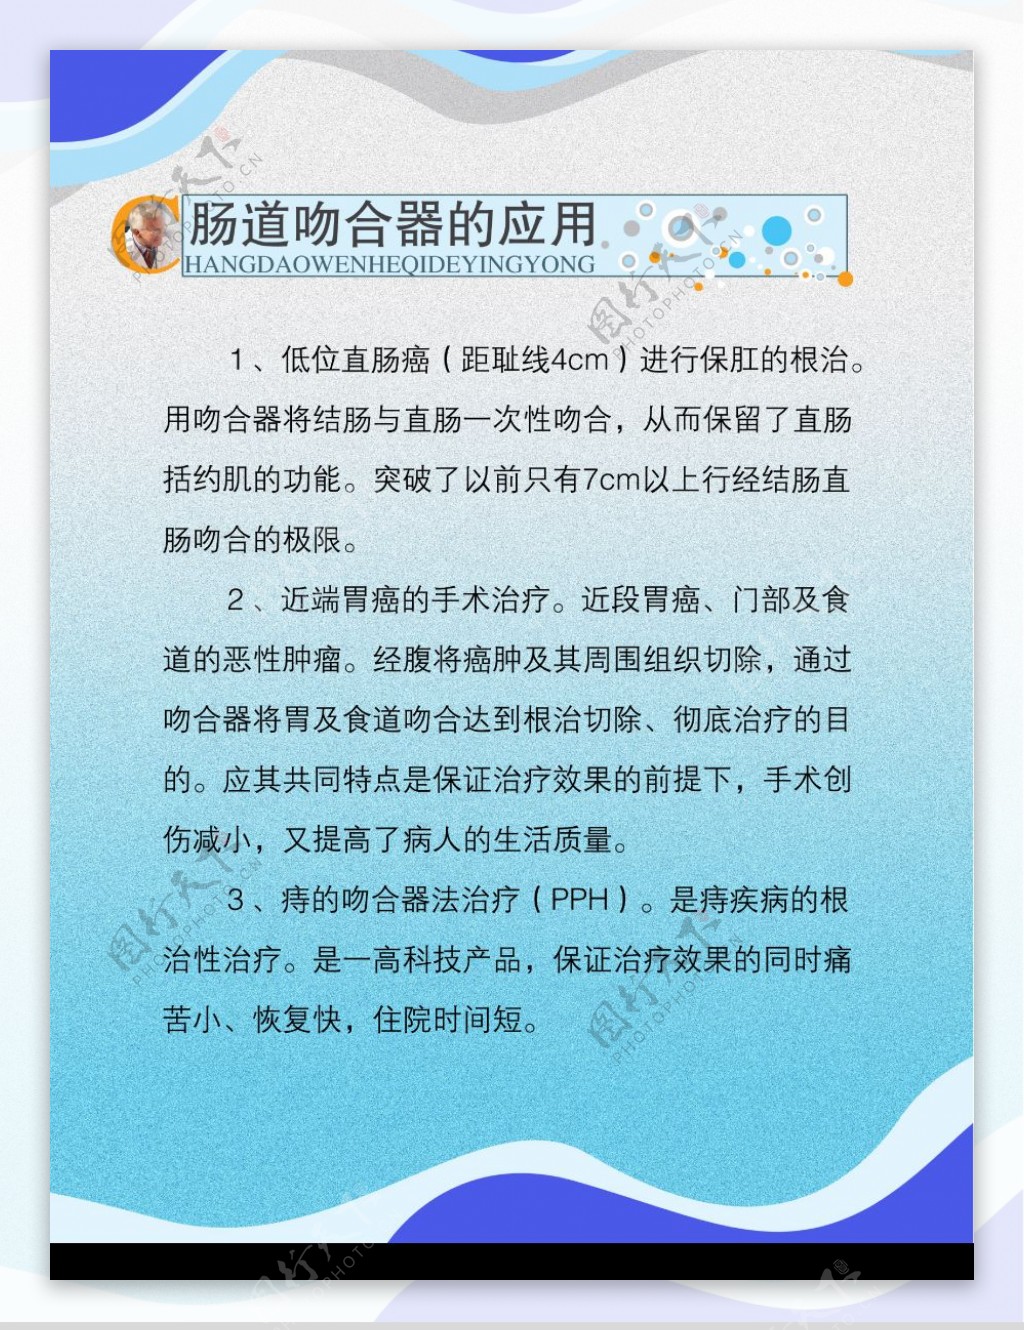 JCI认证永远在路上—上海万众医疗公司召开JCI持续改进委员会工作会议